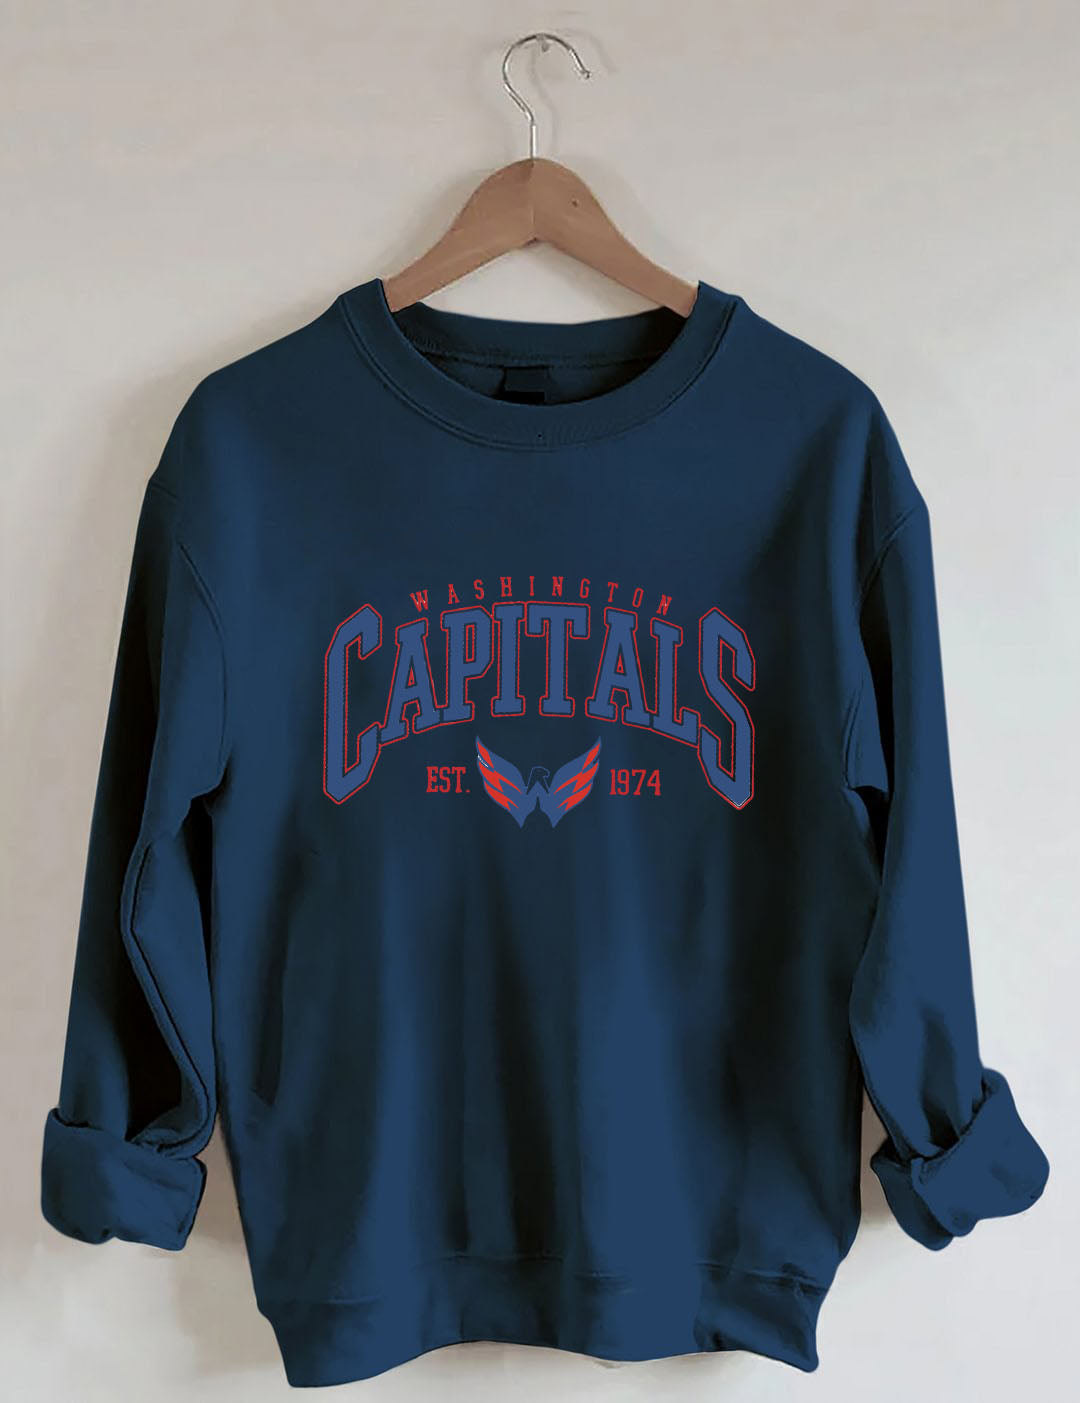 Washington Capitals Sweatshirt